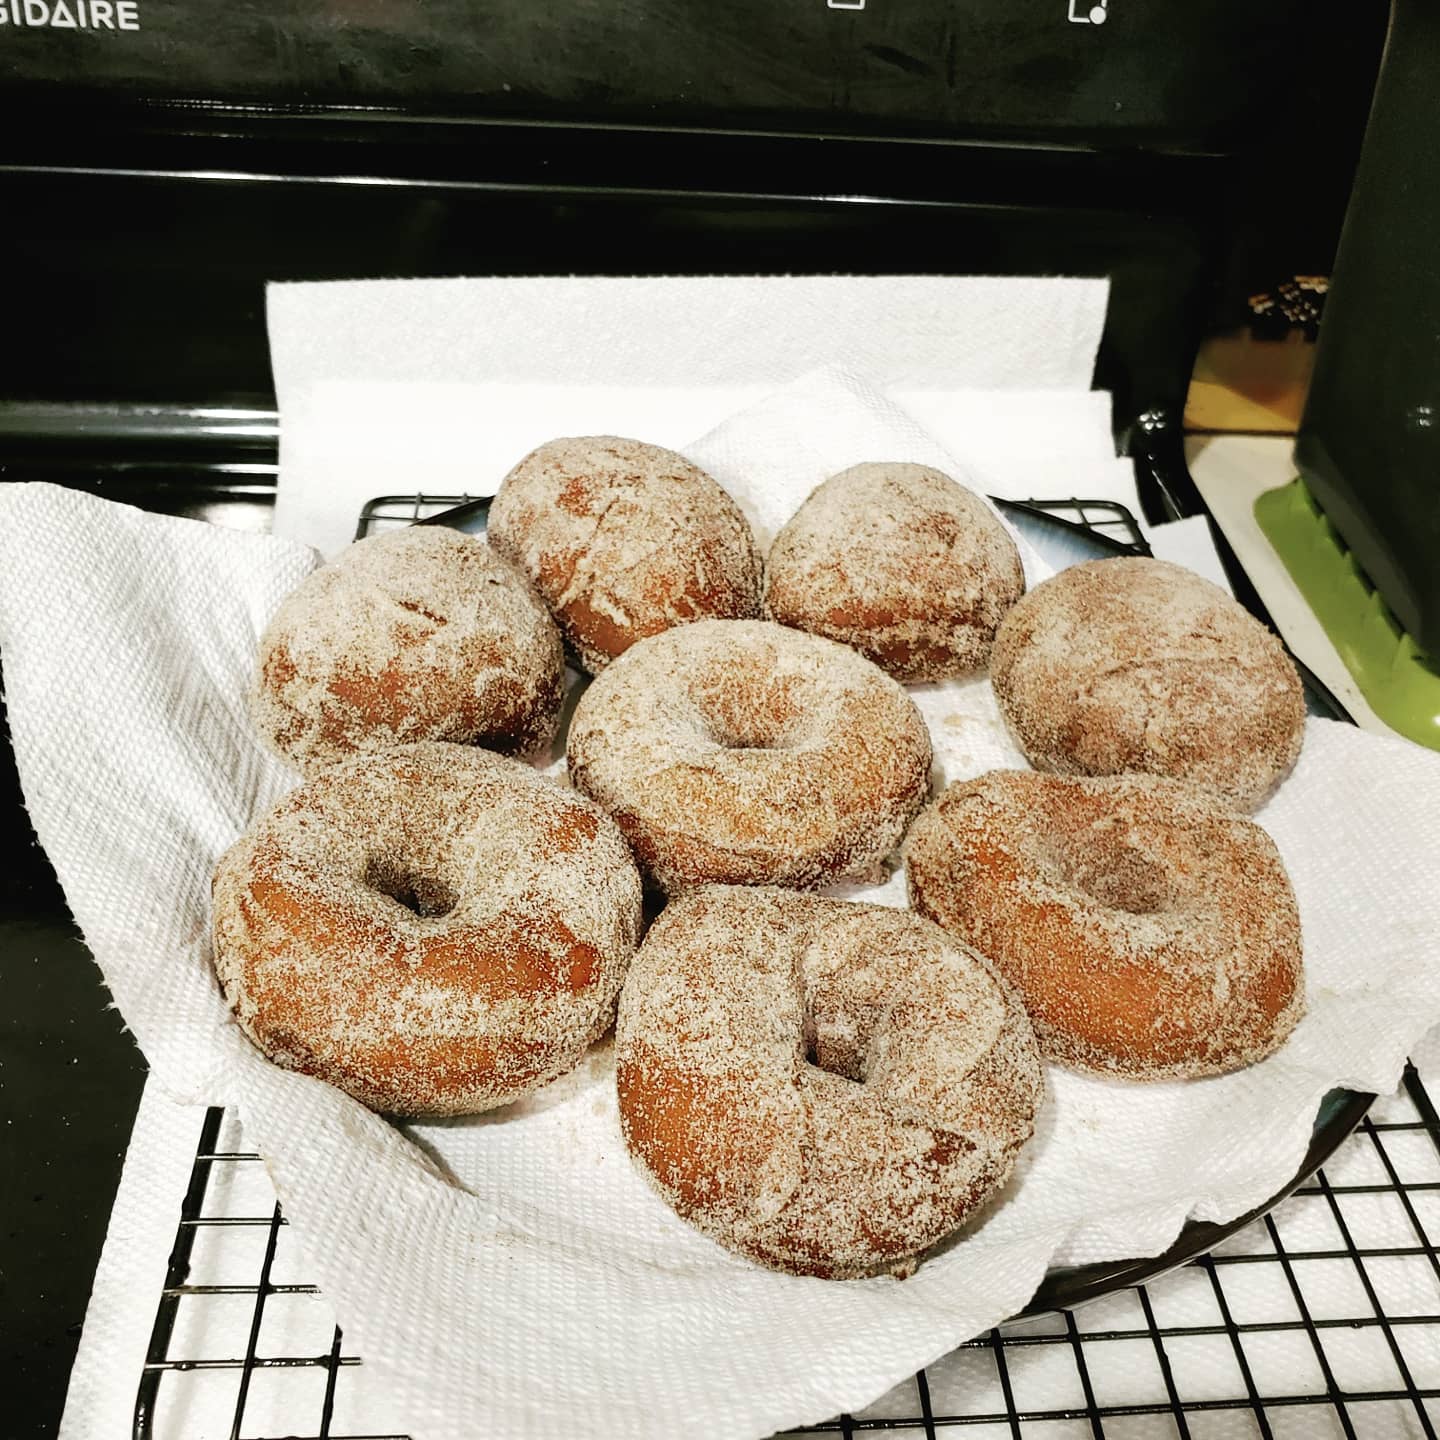 I made malasadas - Portuguese donuts - tonight :)